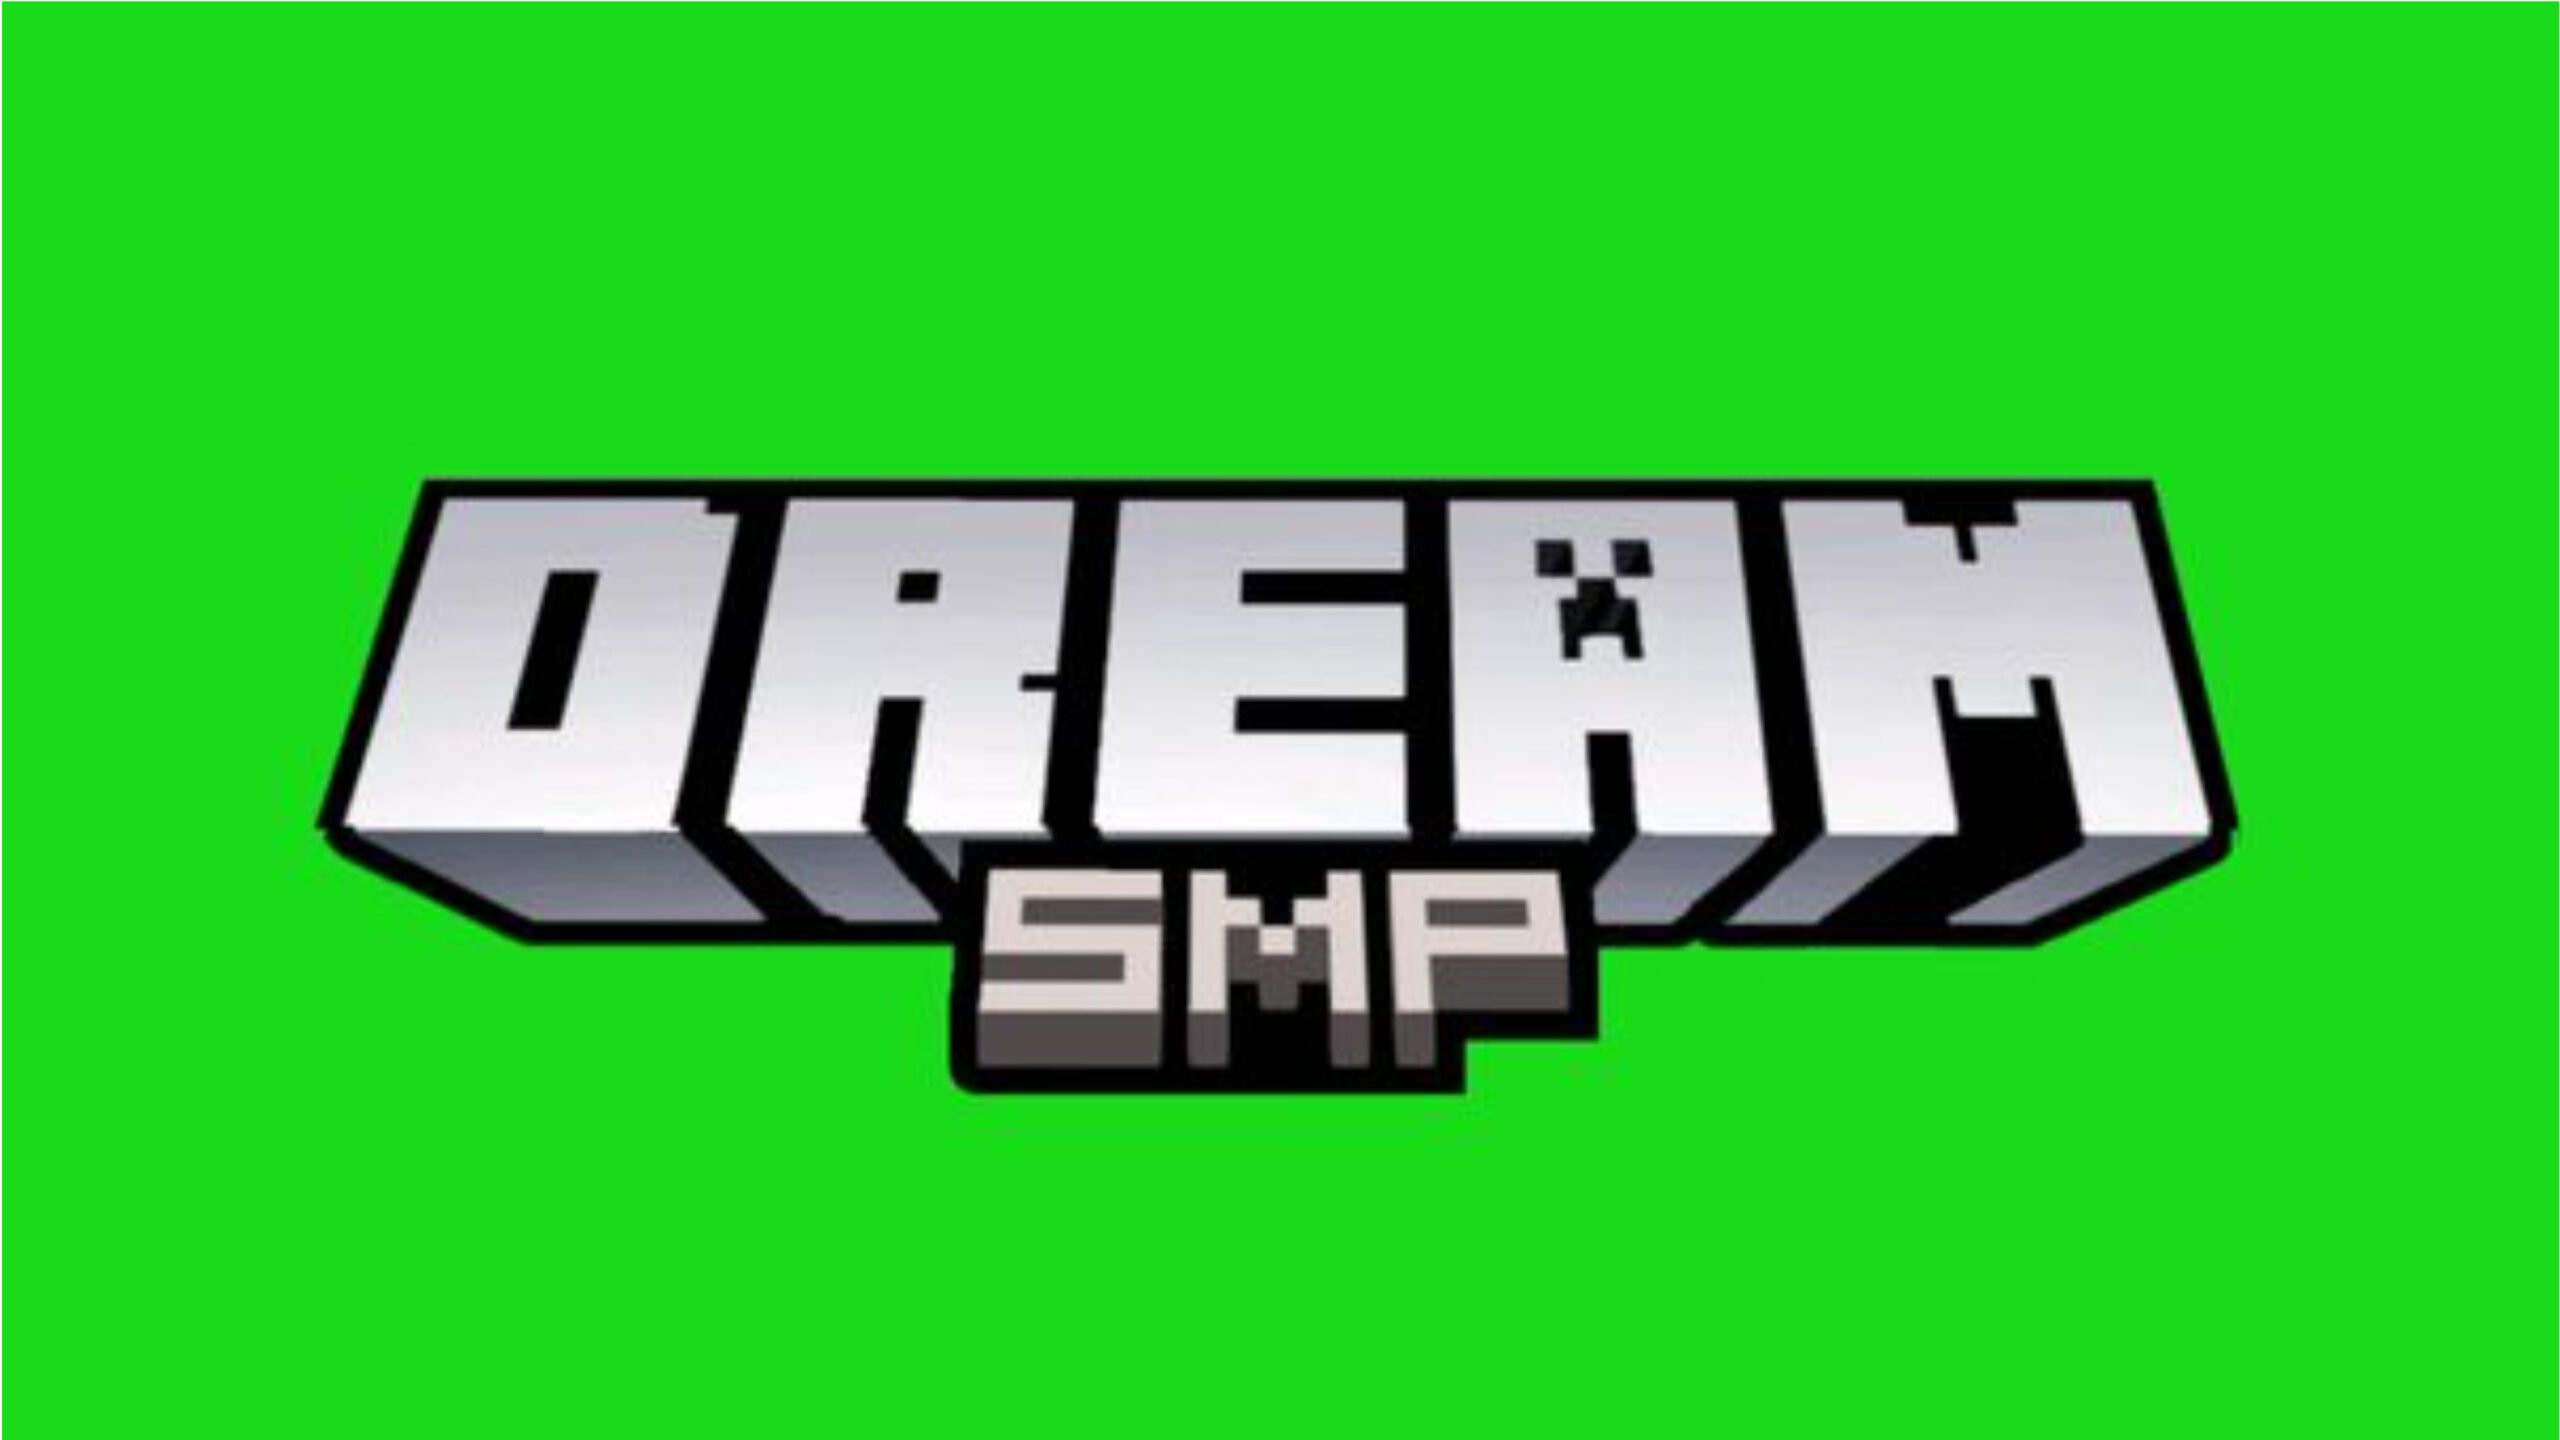 Dream smp